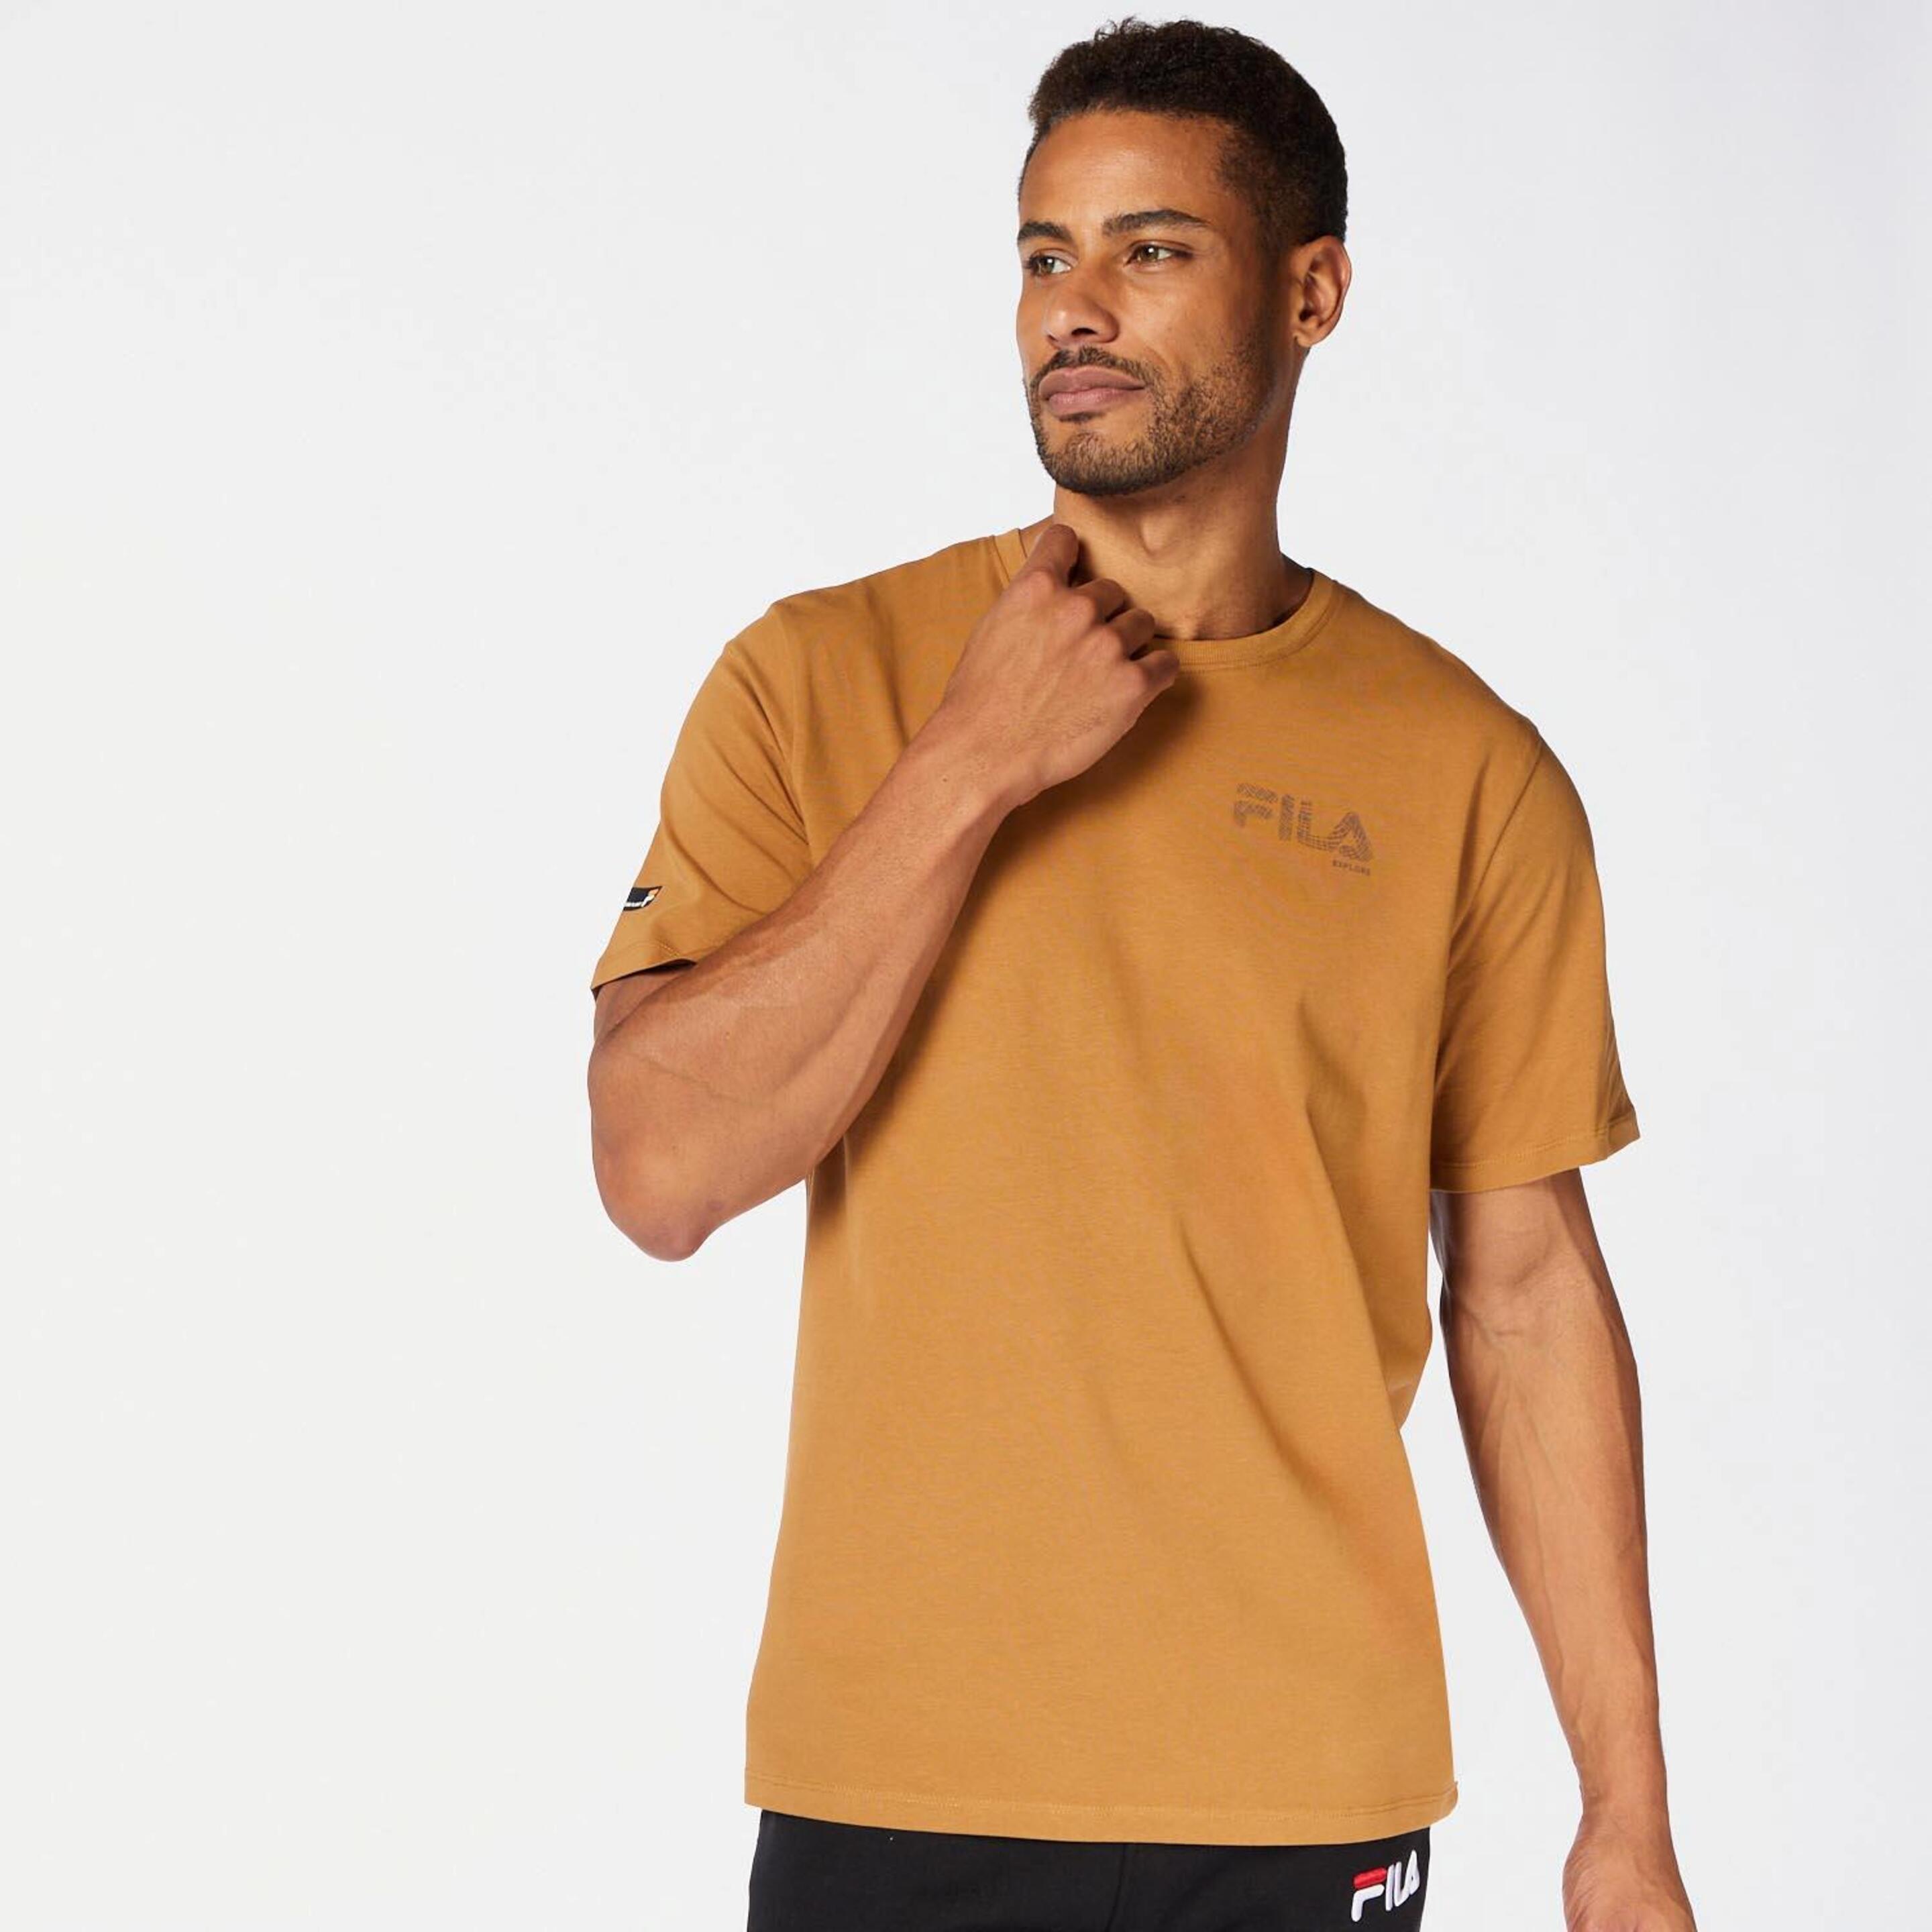 T-shirt Fila - marron - T-shirt Trekking Homem